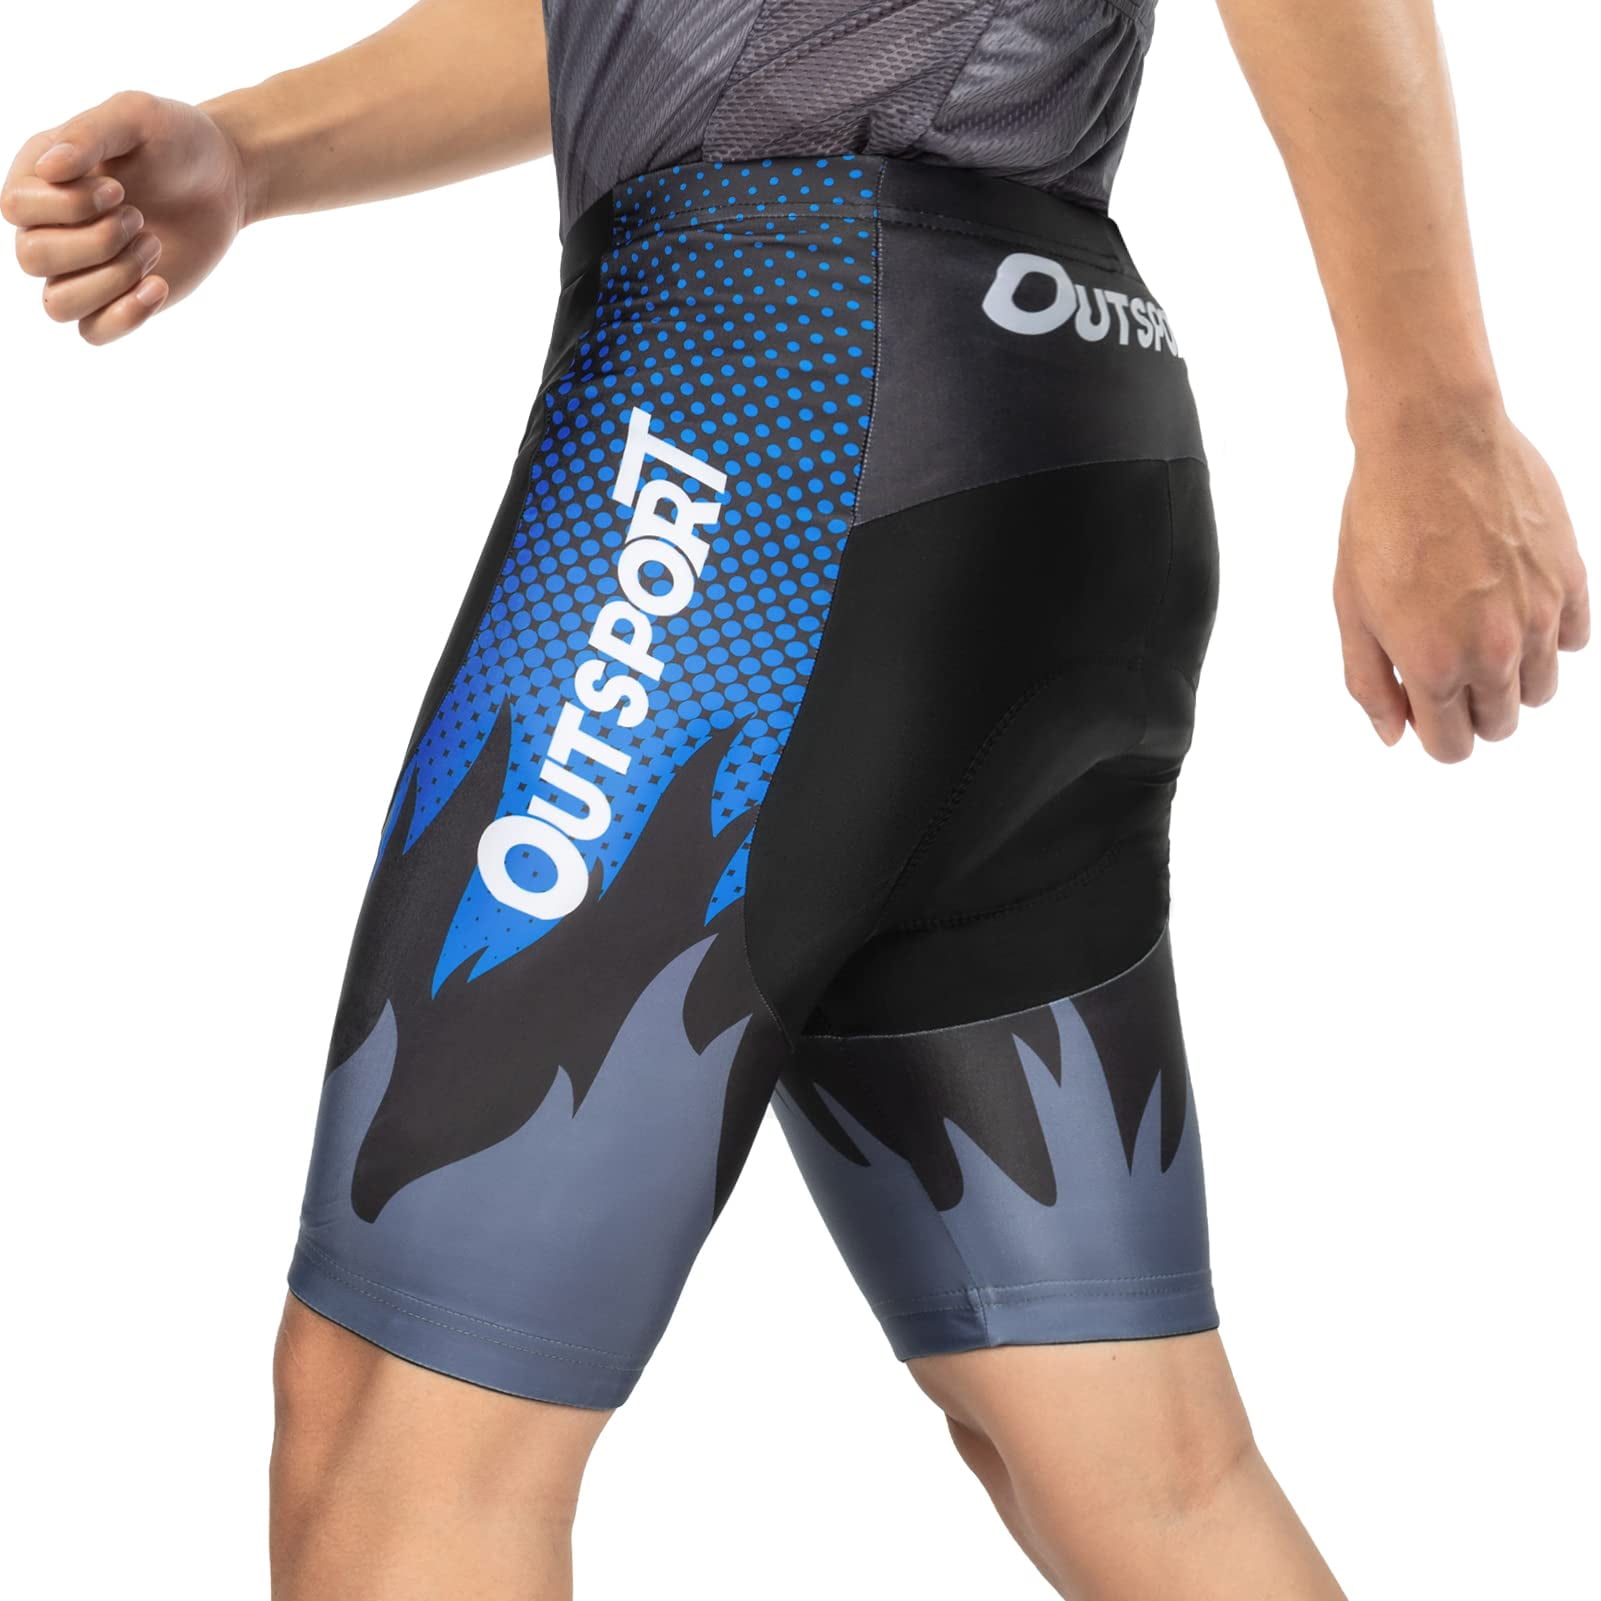 Hiauspor Men's MTB Mountain Bike Shorts with Detached Padded Underwear Lightweight Biking Cycling Ridding Shorts Loose-fit 